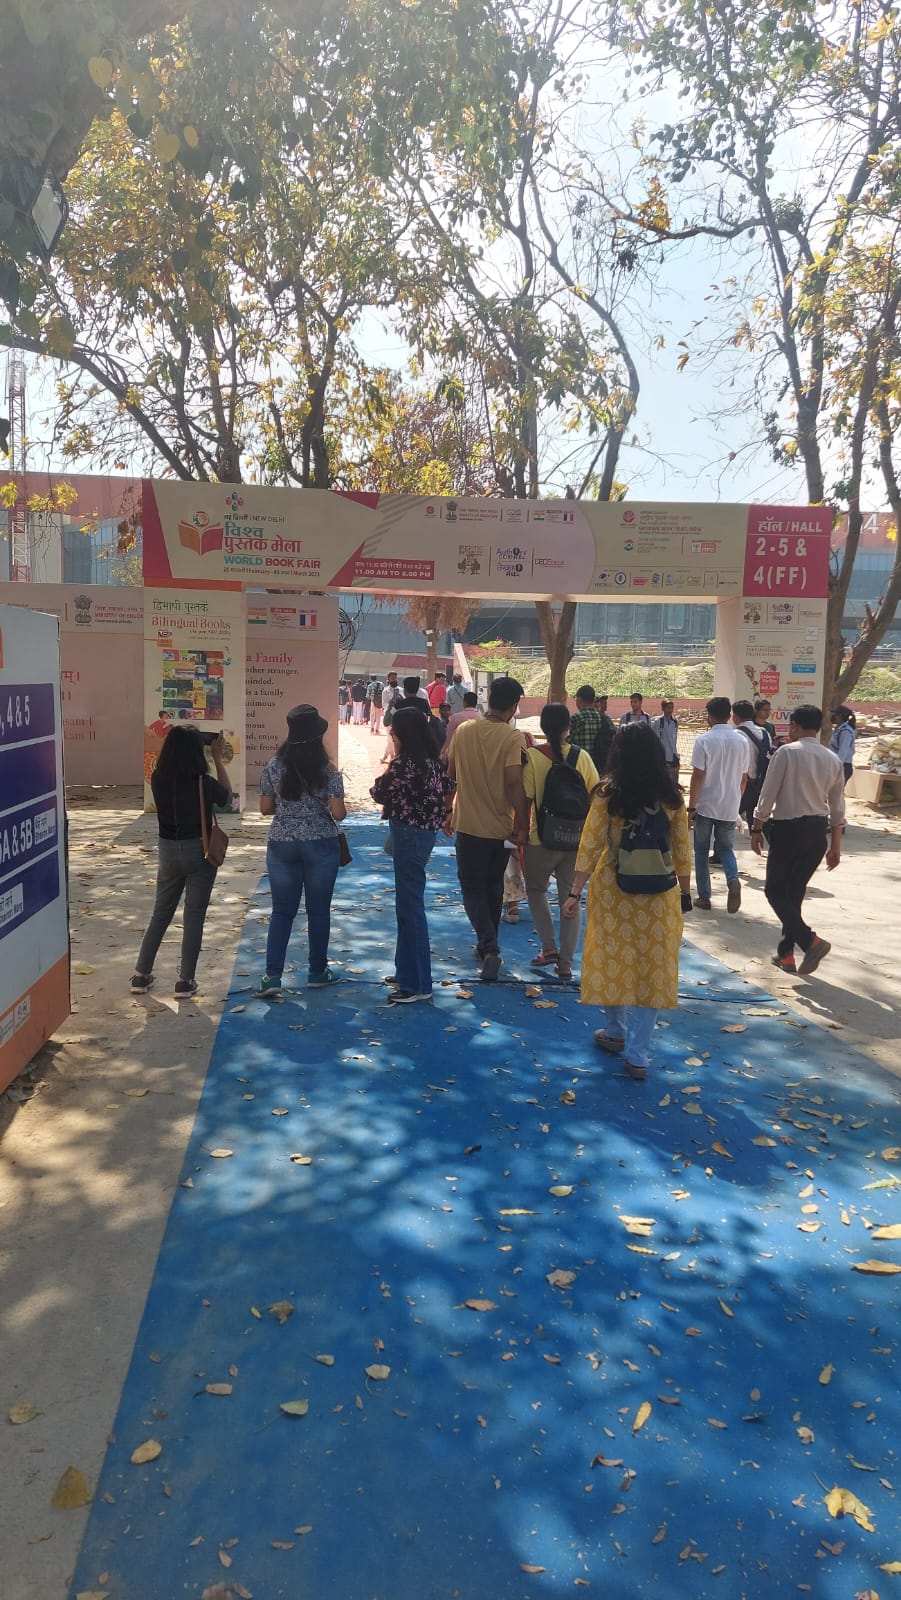 What can we expect at World Book Fair at Pragati Maidan, New Delhi?